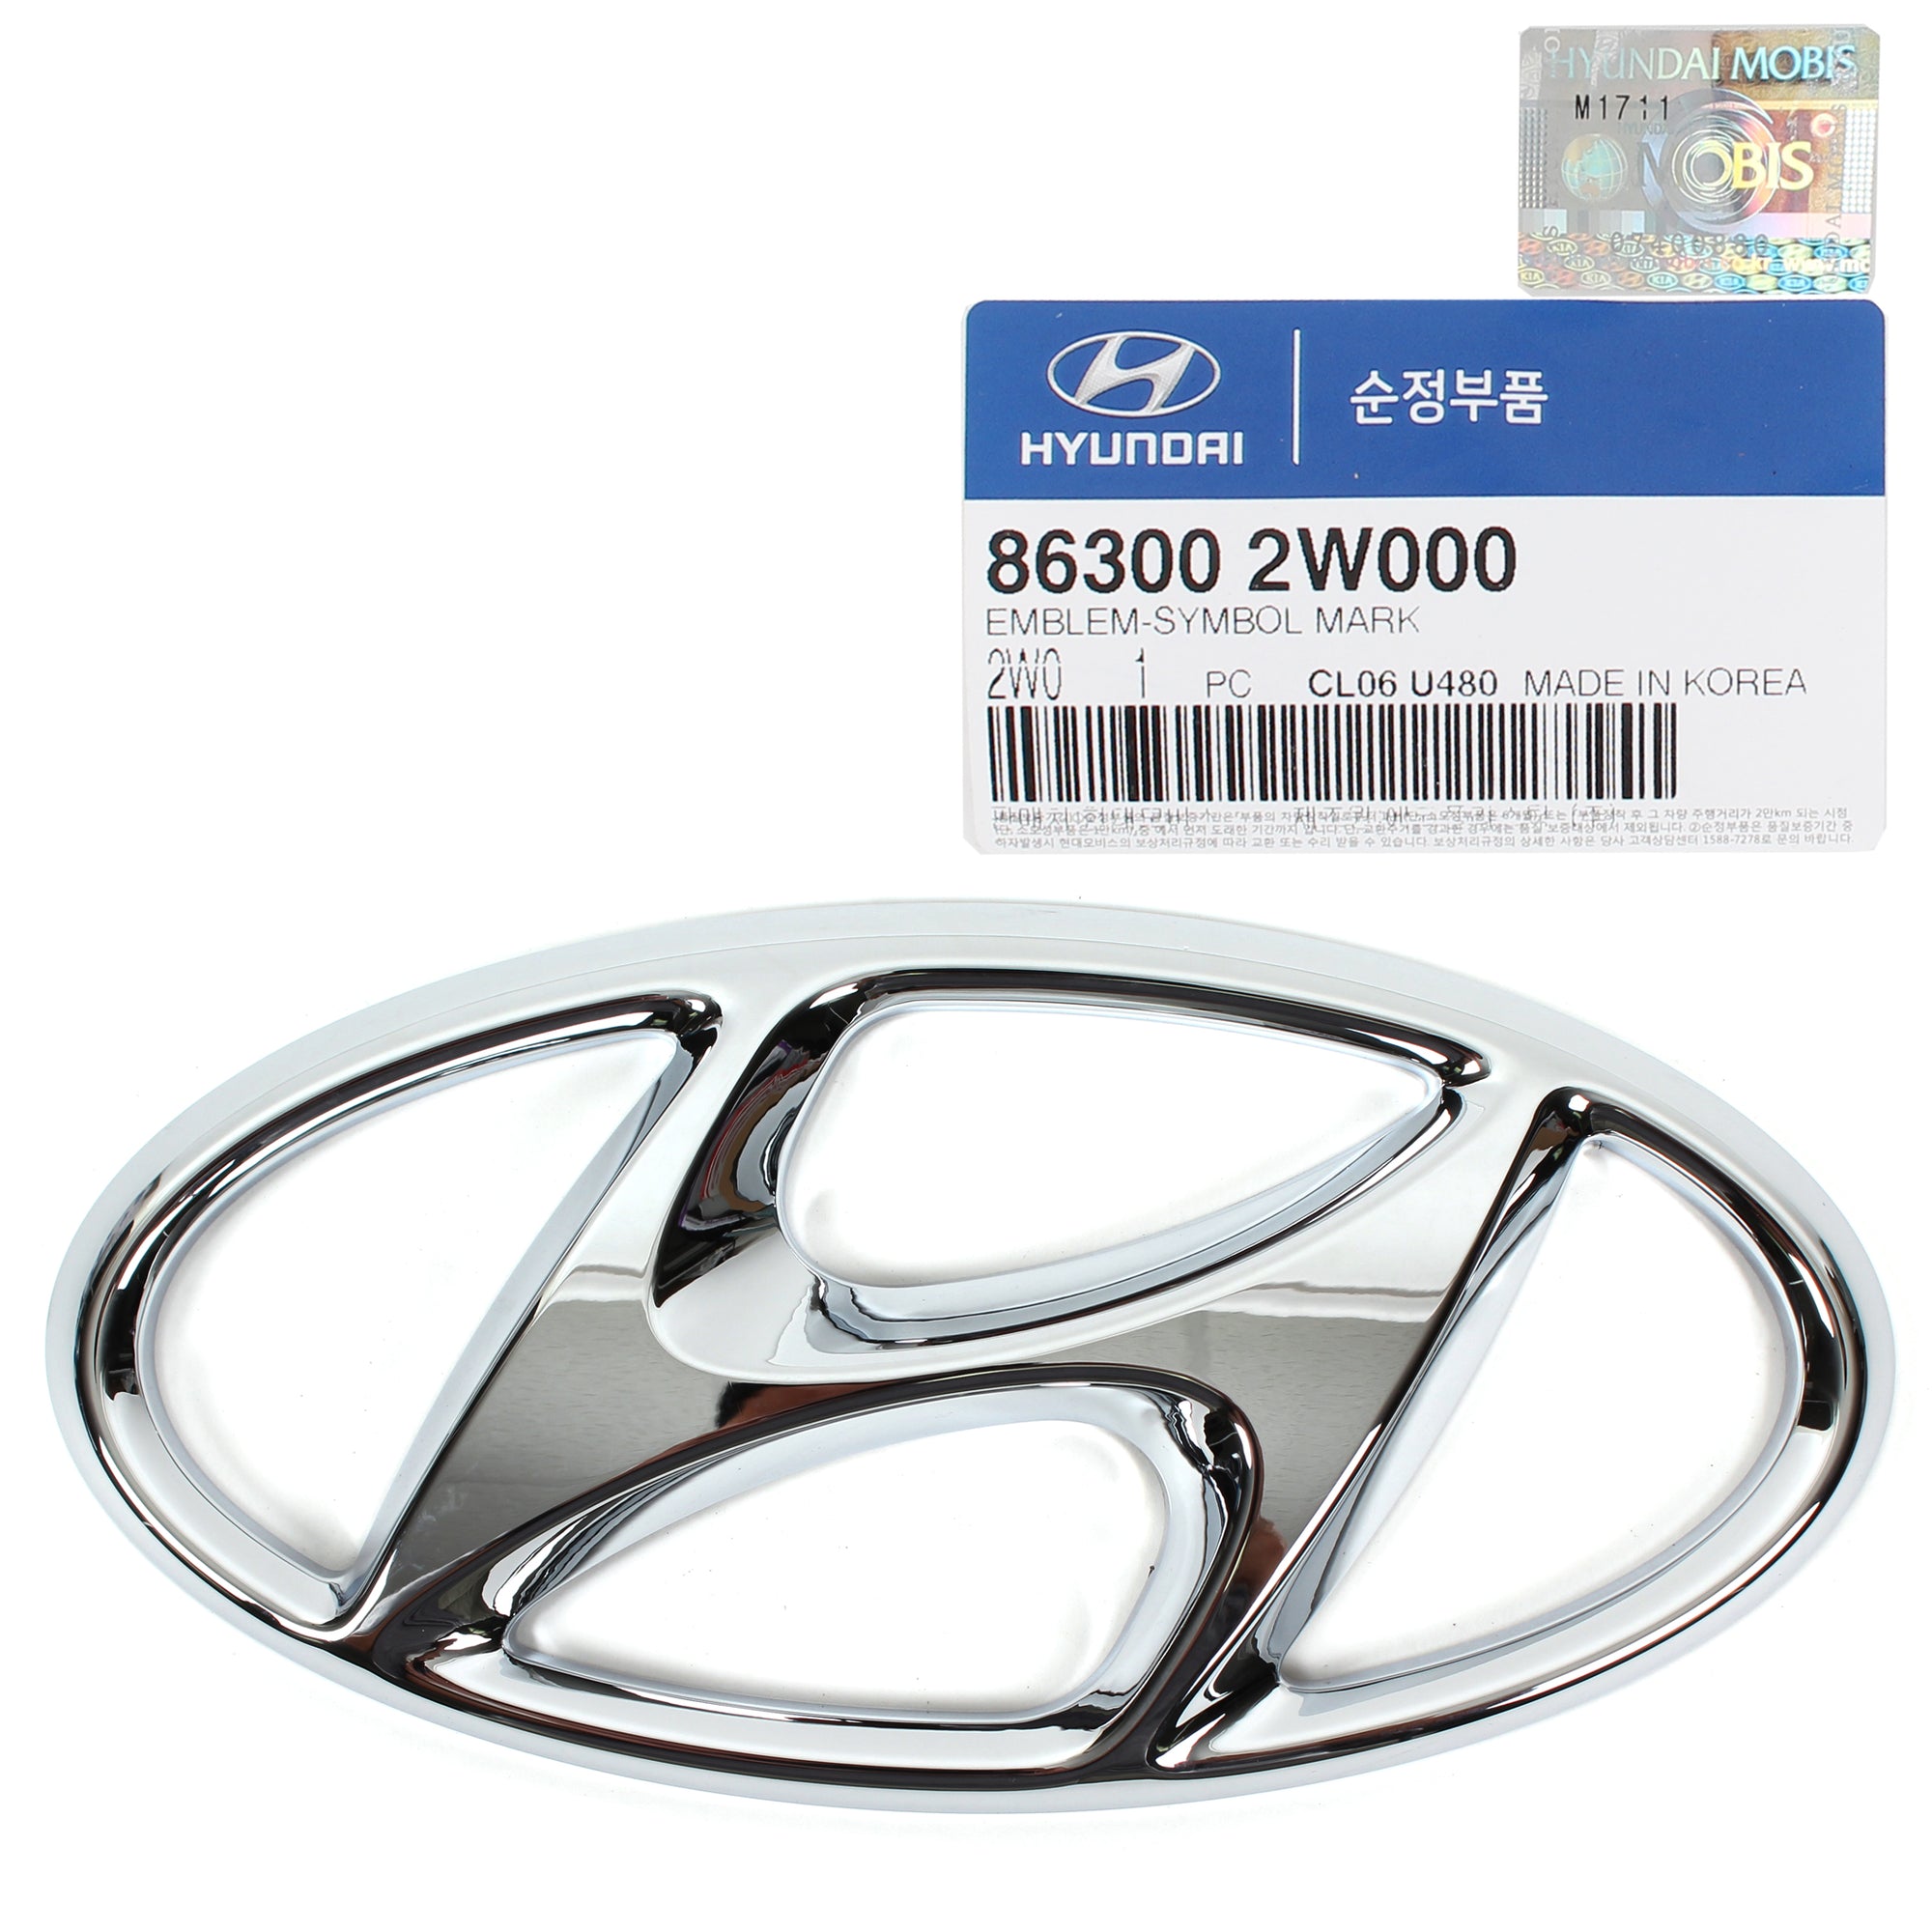 GENUINE FRONT Grille "H" Emblem for 13-16 Hyundai Santa Fe OEM 863002W000